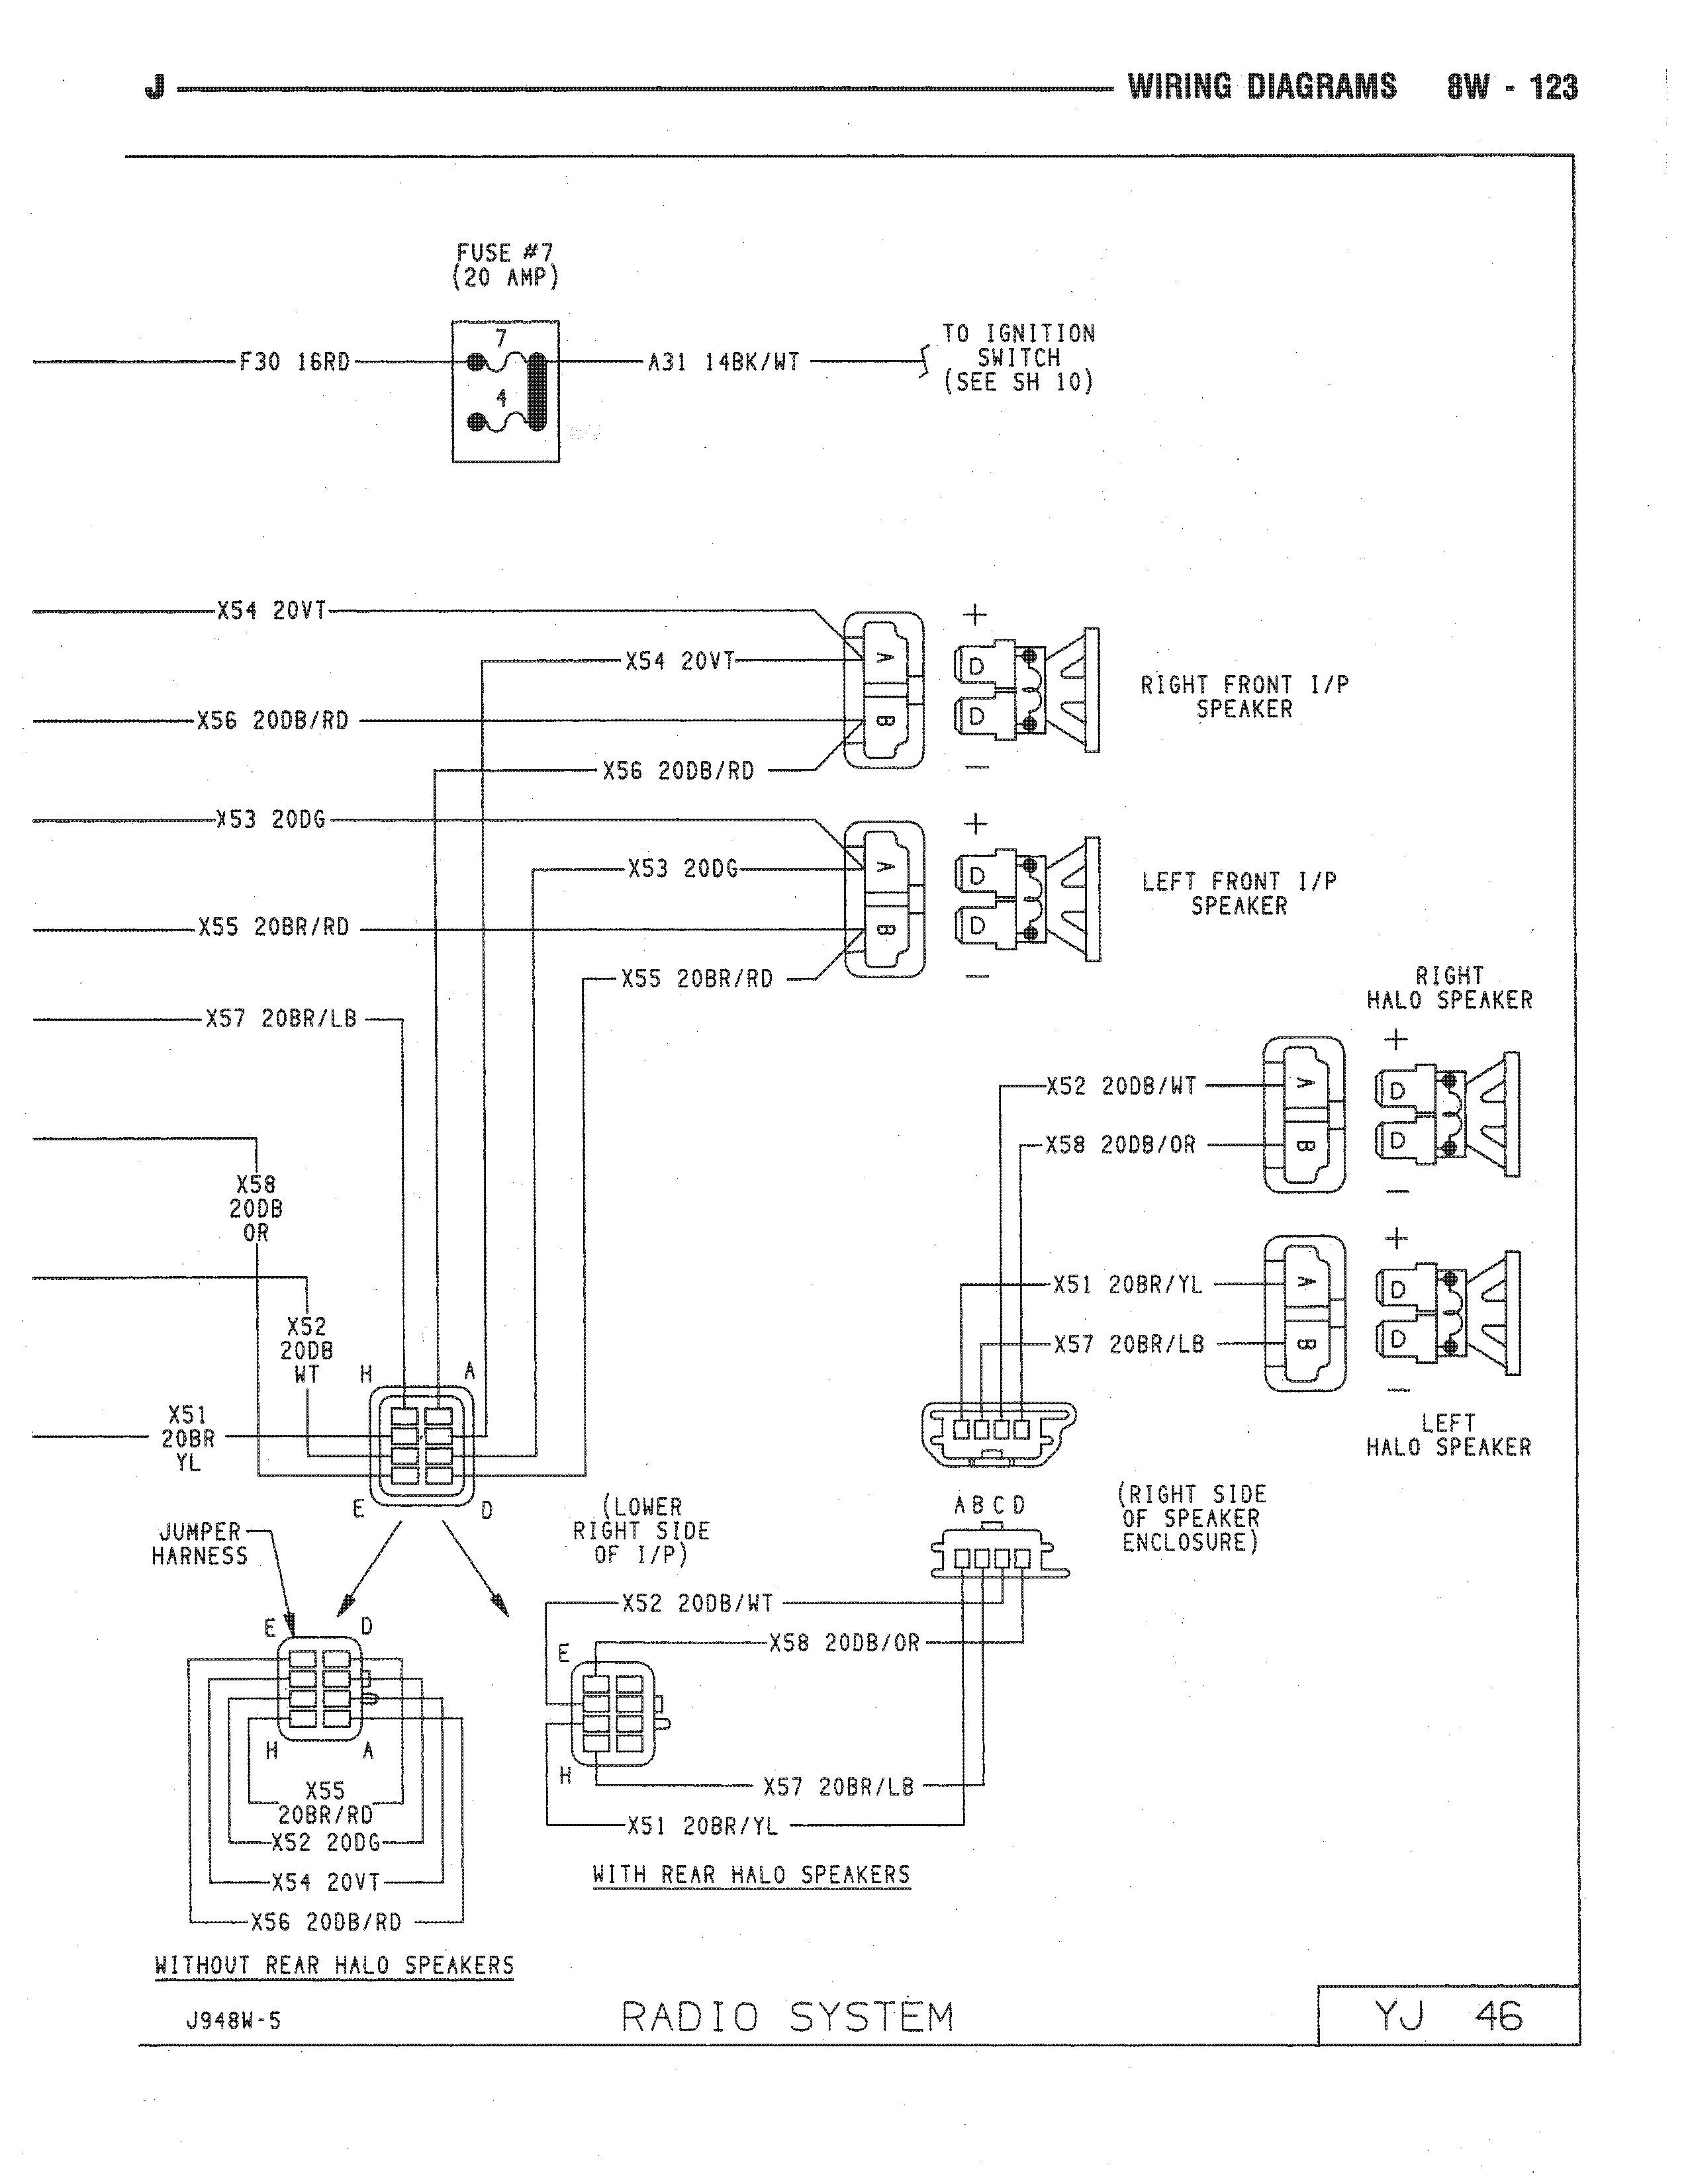 Jeep Wrangler Wiring Diagram | Jeep Wrangler Yj | Jeep Wrangler - Jeep Wrangler Wiring Diagram